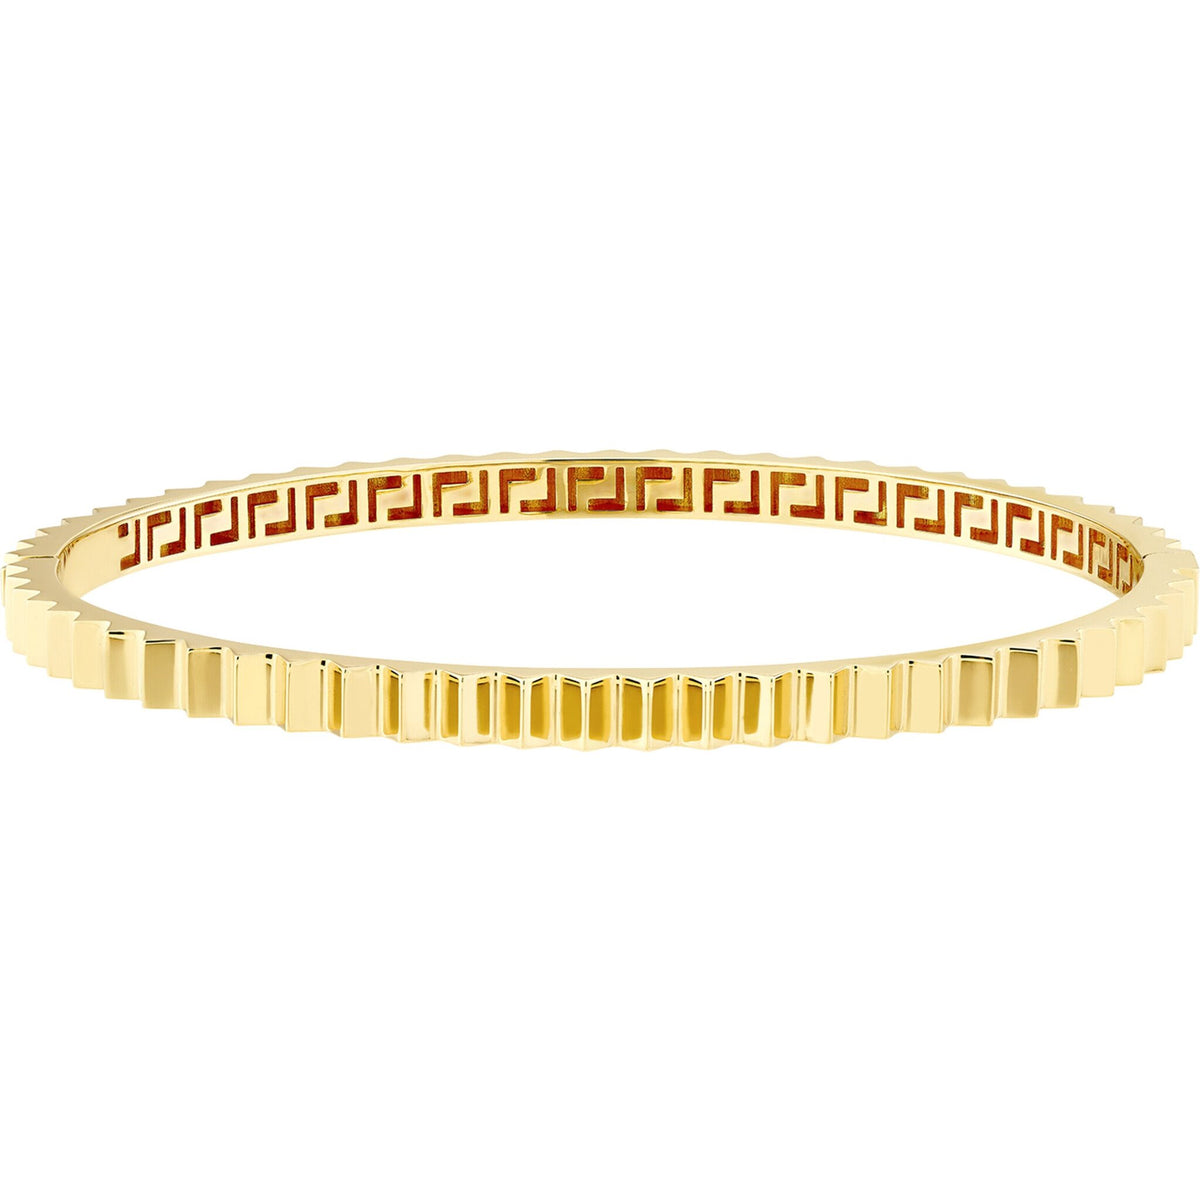 Olas d'Oro Bracelet - 14K Yellow Gold Fluted Hinge Bangle Bracelet